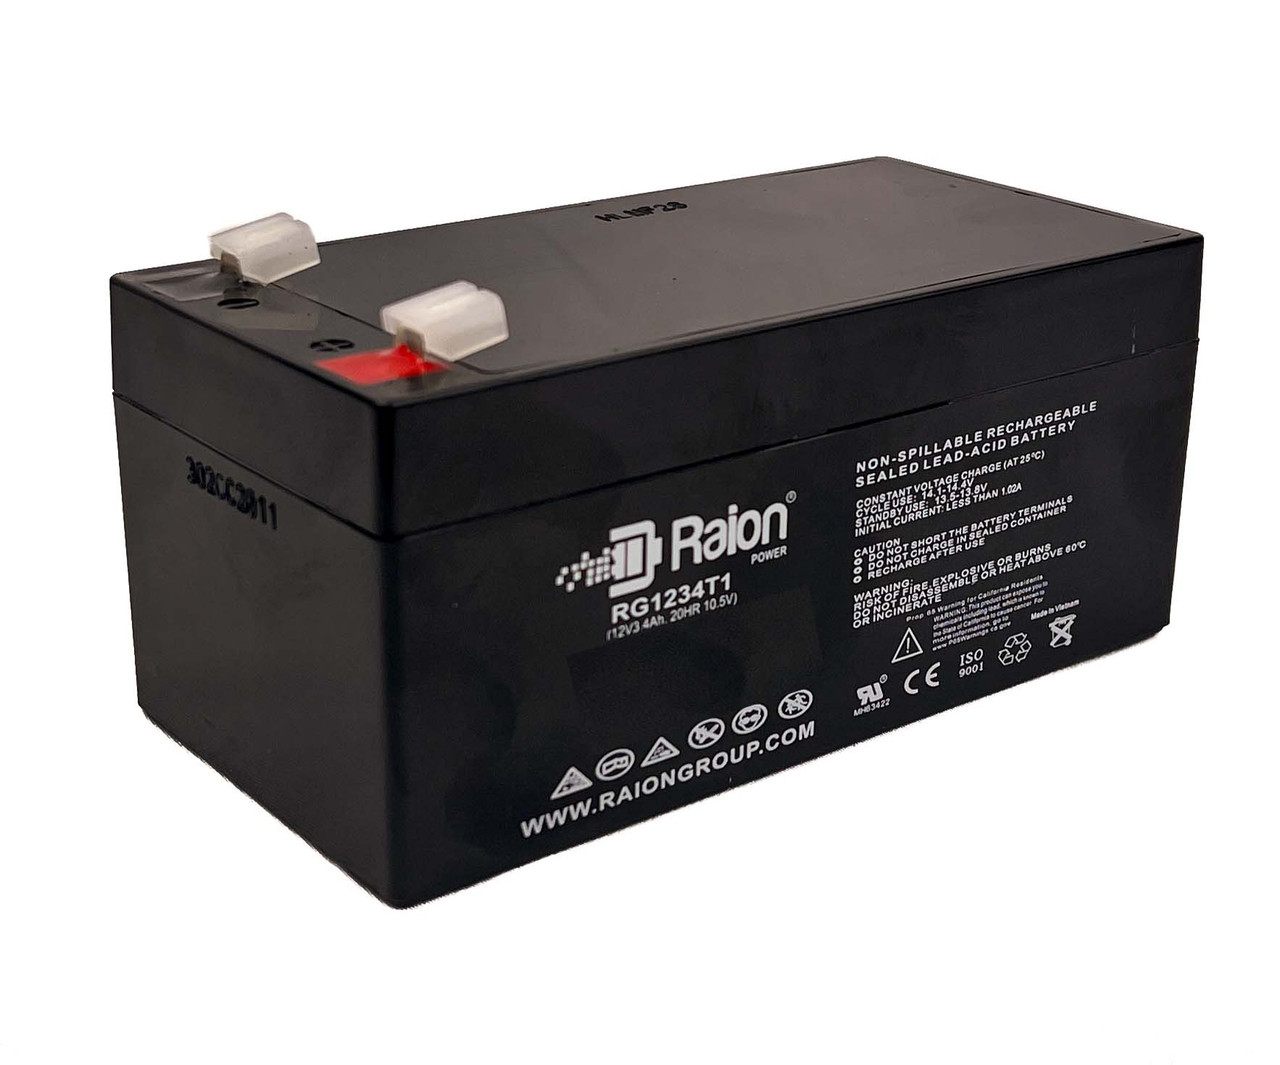 Raion Power 12V 3.4Ah Non-Spillable Replacement Battery for Magnavolt SLA12-3.5